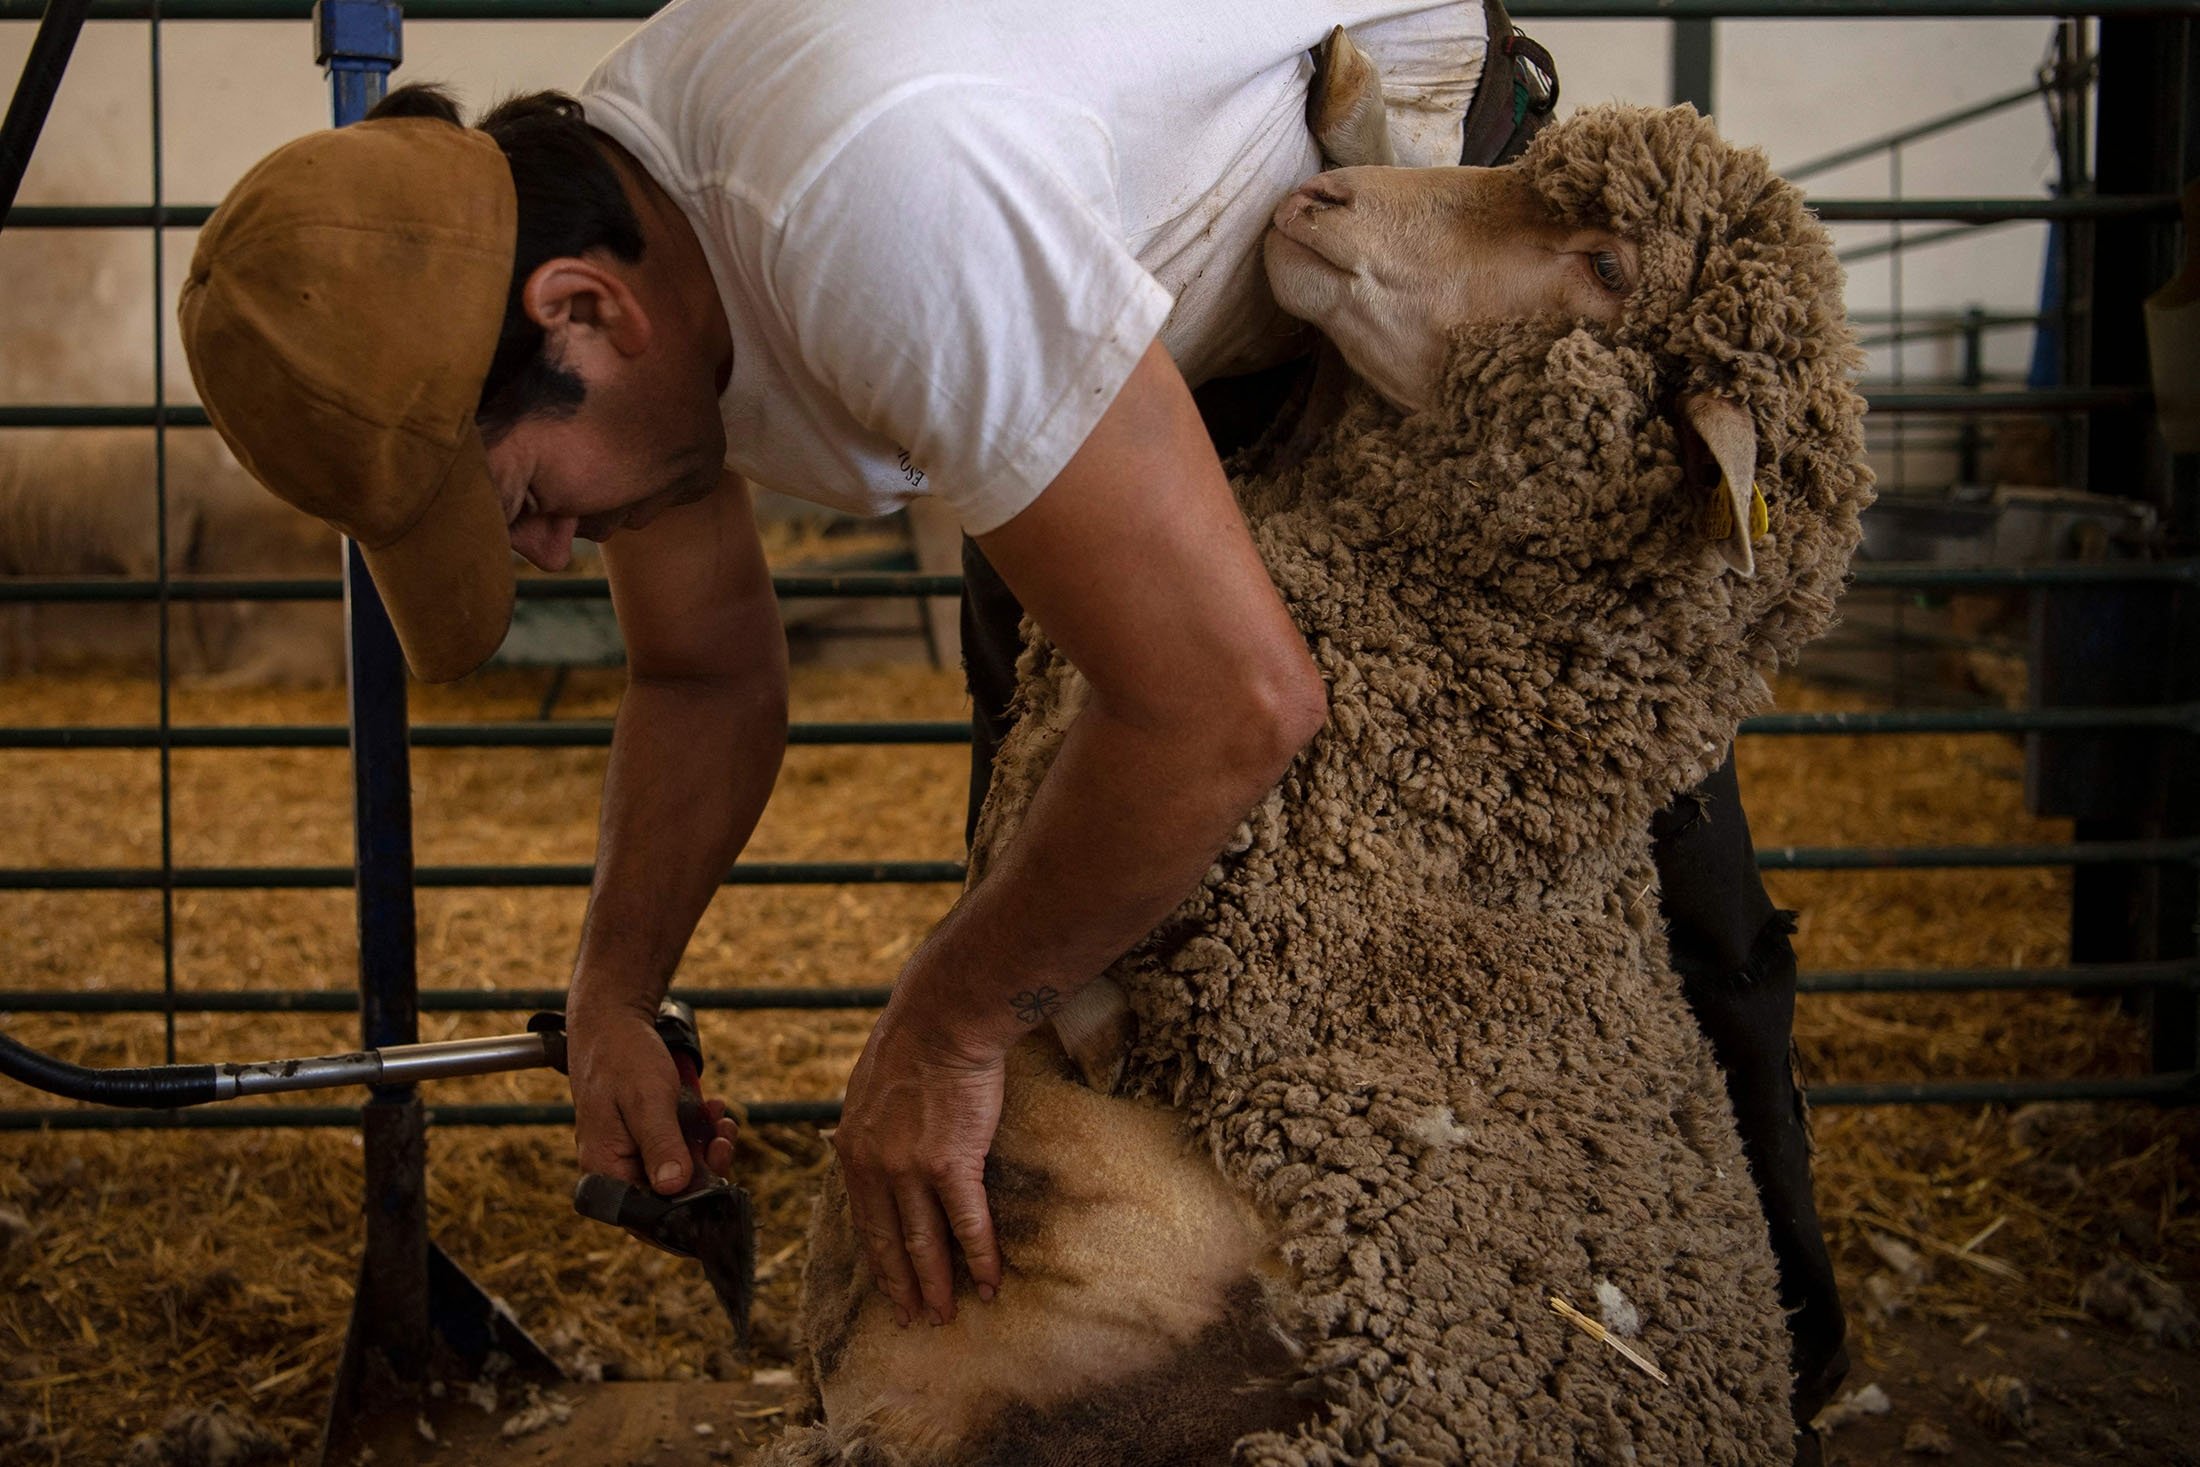 A sheep is sheared during a class at Cooprado farm's shepherding school in Casar de Caceres, Spain, May 13, 2022. (AFP Photo)